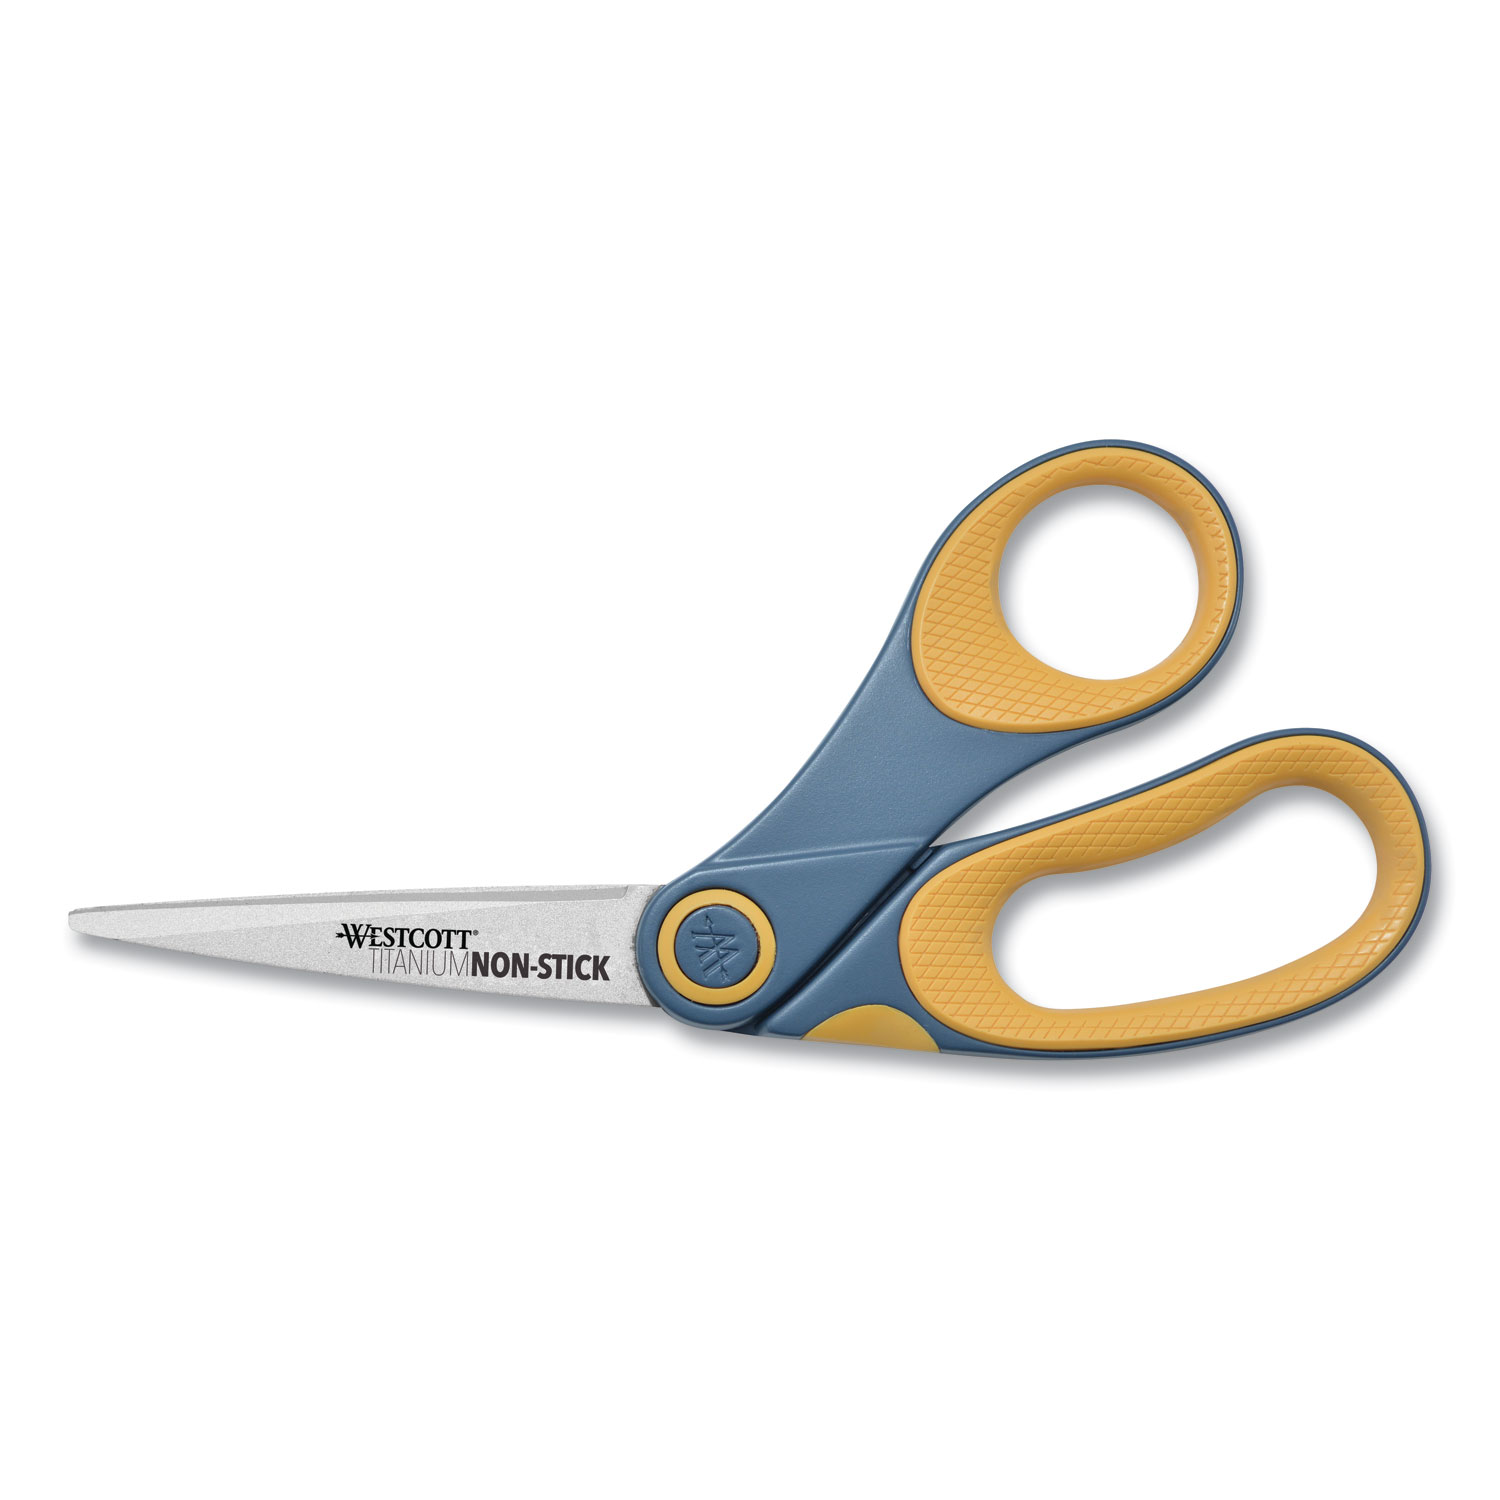  Westcott 14850 Non-Stick Titanium Bonded Scissors, 8 Long, 3.25 Cut Length, Gray/Yellow Offset Handle (ACM14850) 